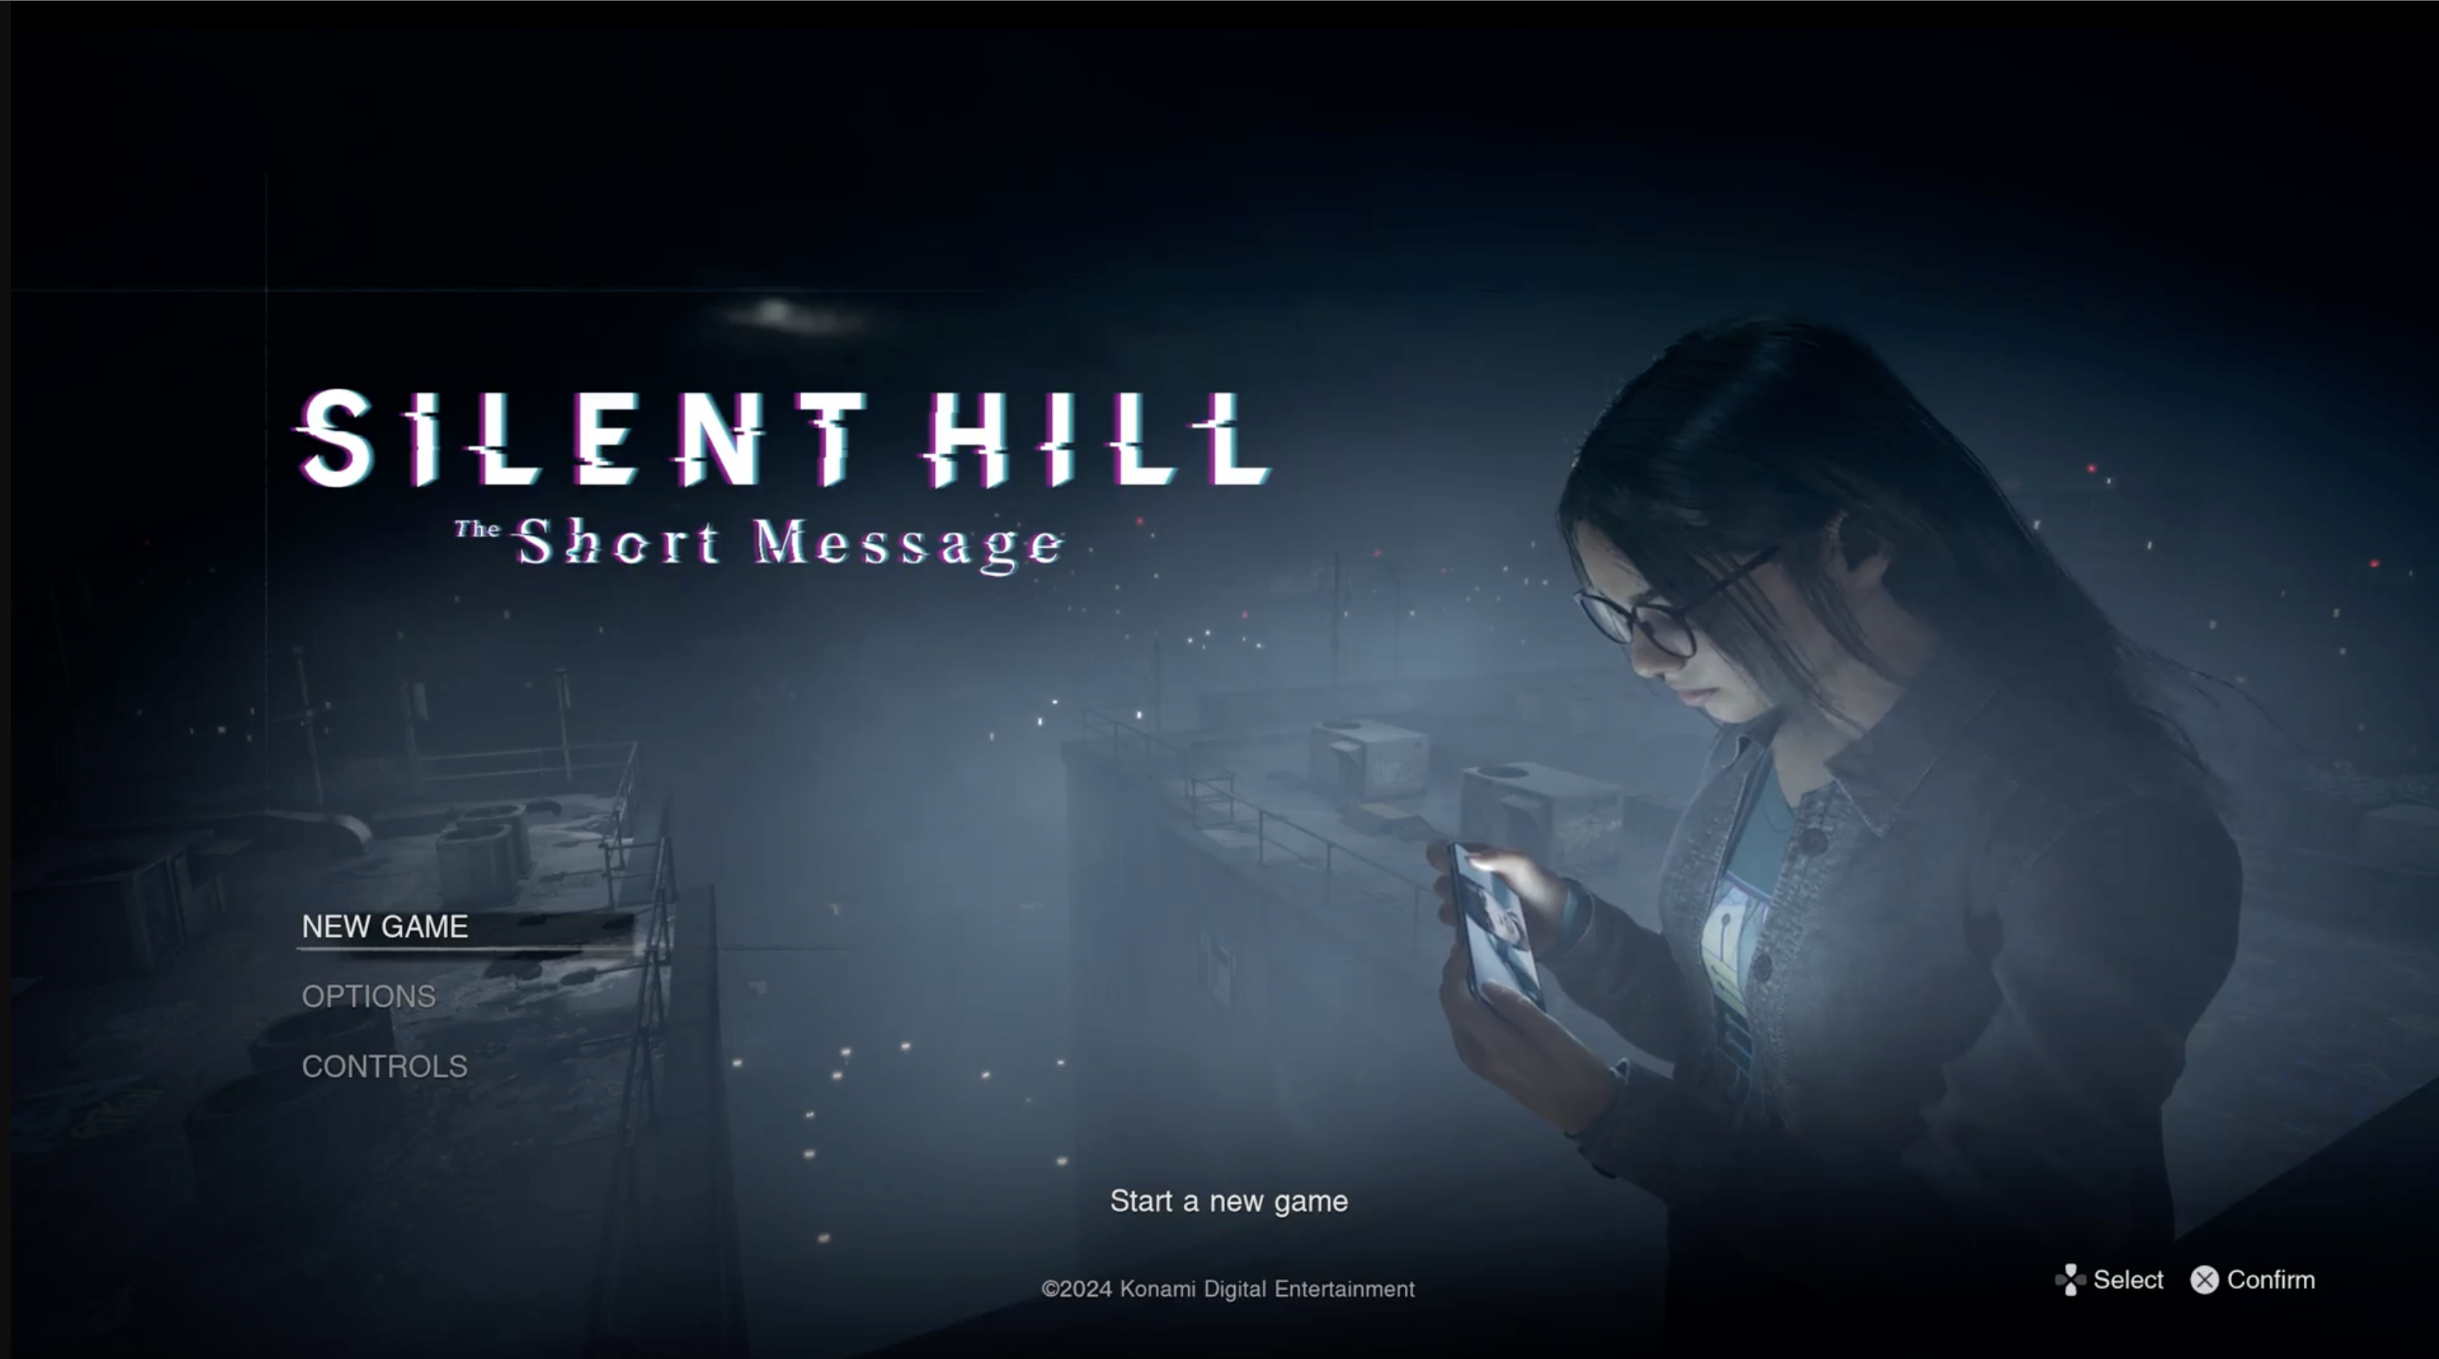 The Silent Hill: Short Message